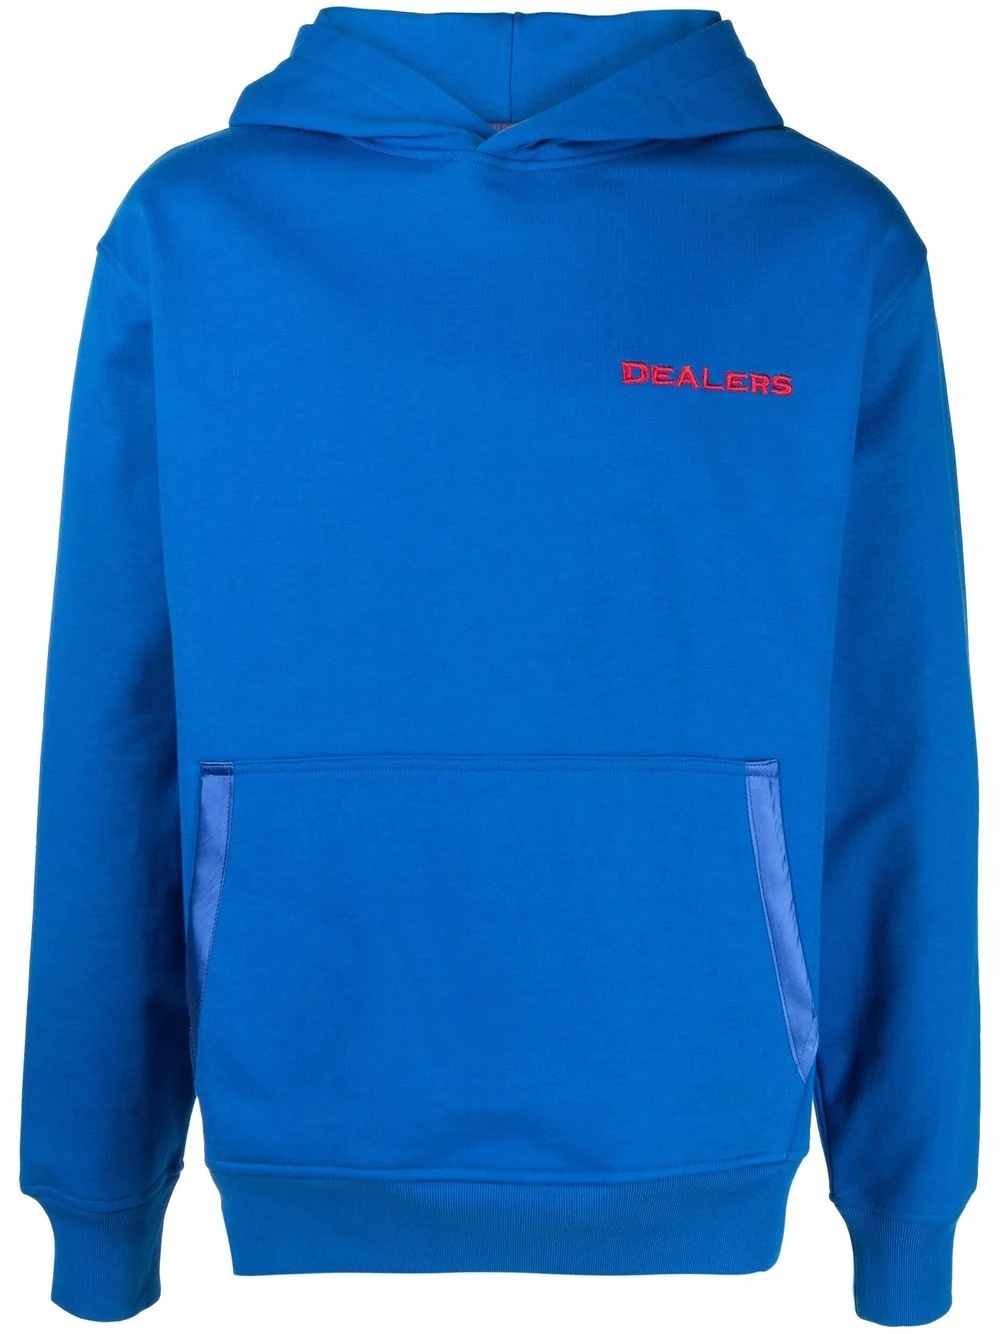 embroidered-Dealers hoodie - 1